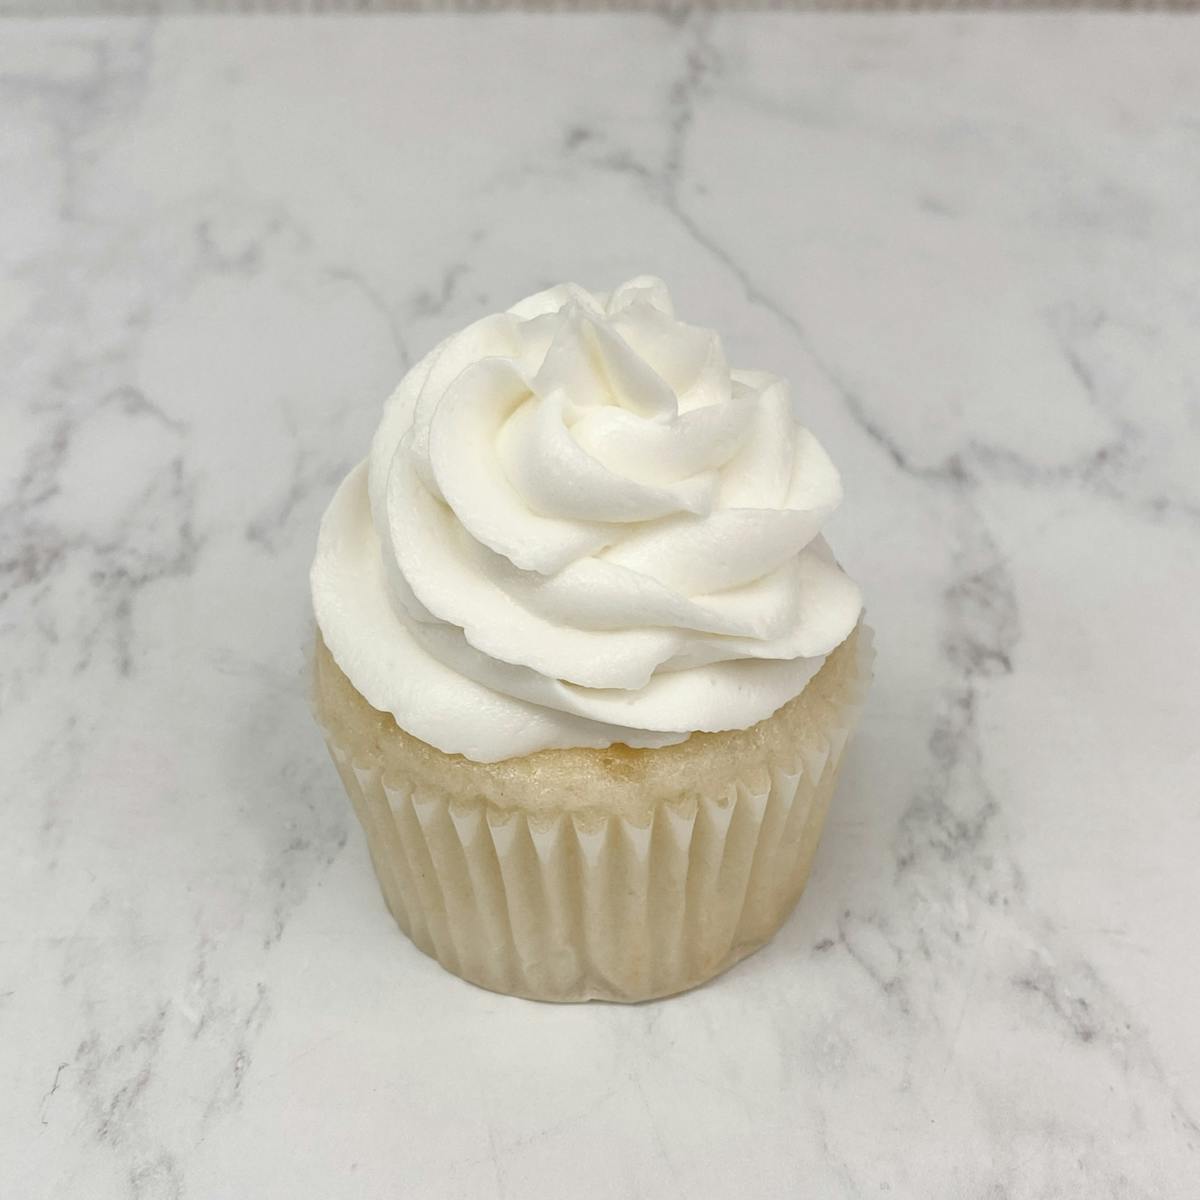 a vanilla cupcake